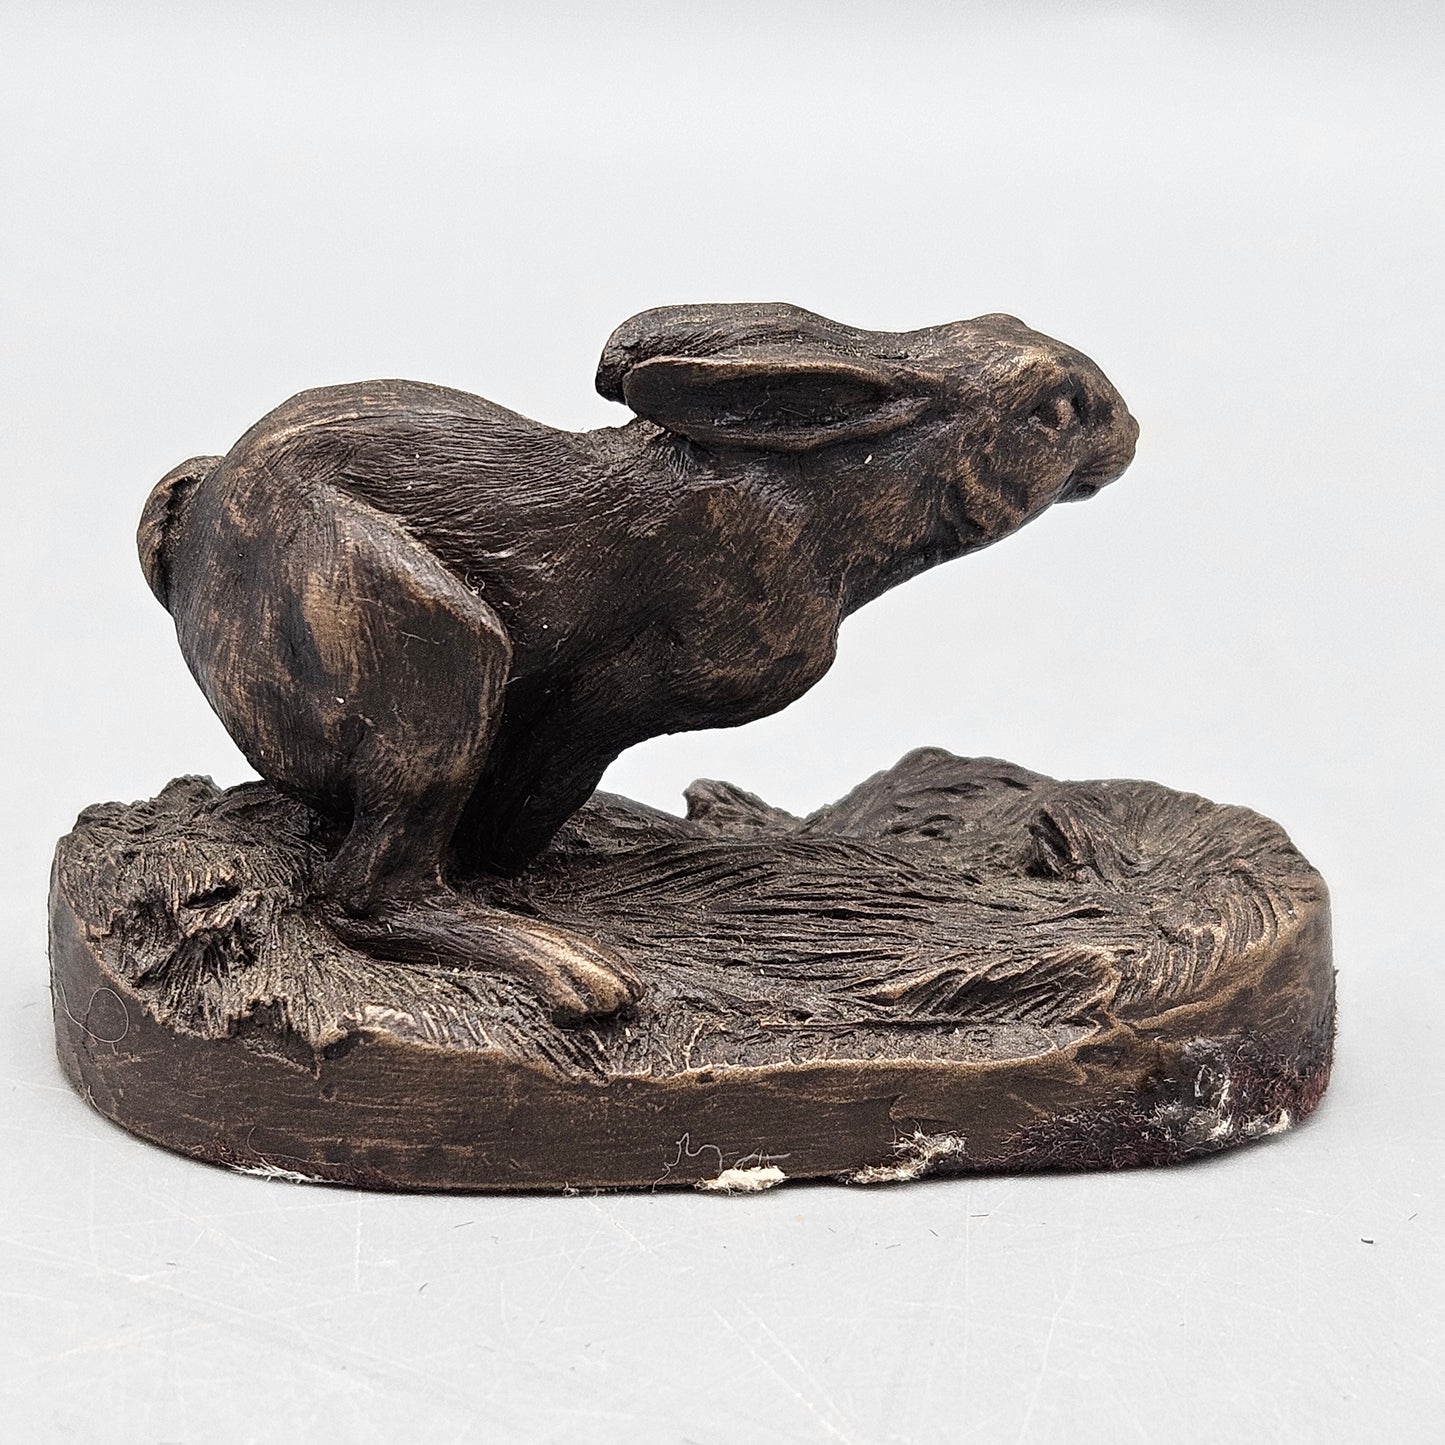 Miniature Antique Signed Bronze Sculpture of a Rabbit Hopping